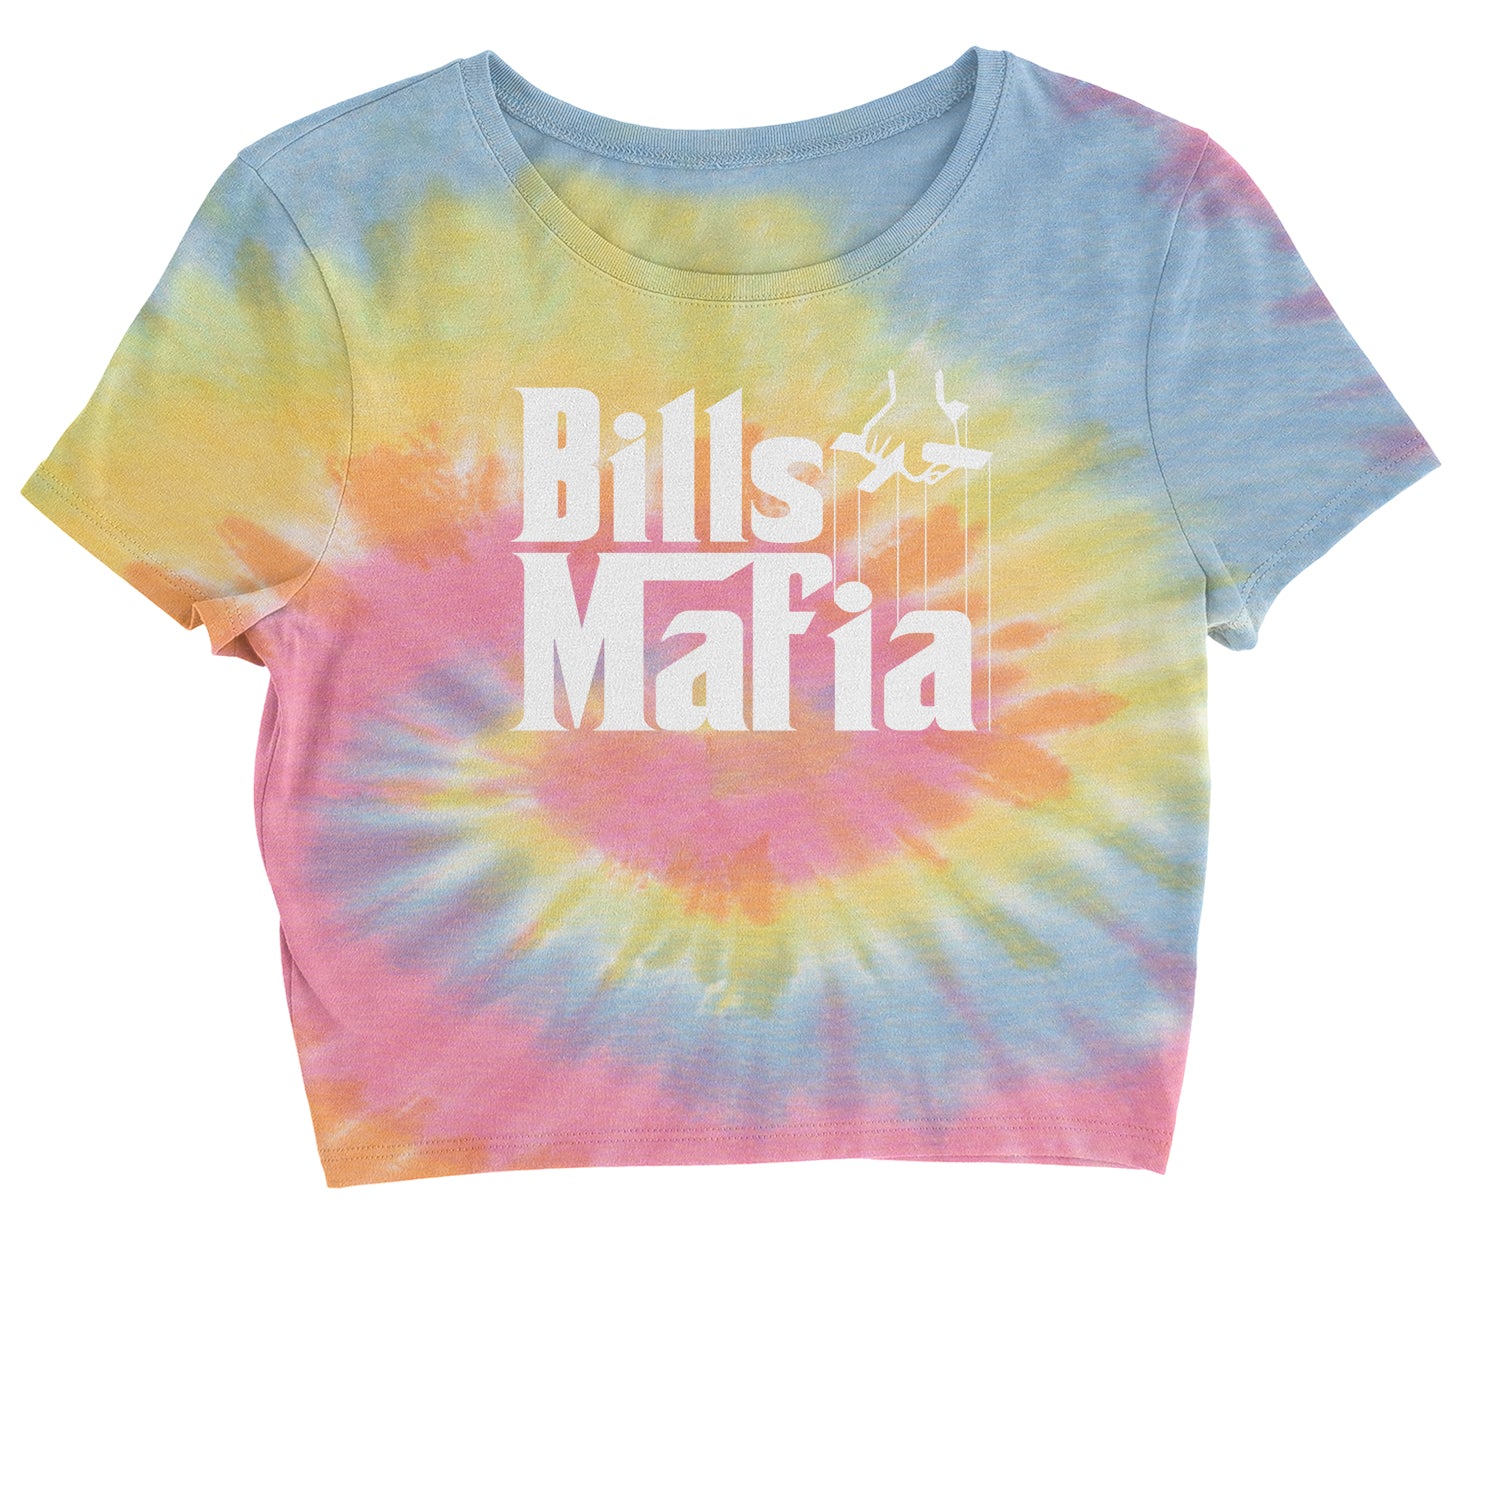 Mafia Bills Mafia Godfather Cropped T-Shirt bills, fan, father, football, god, godfather, new, sports, team, york by Expression Tees